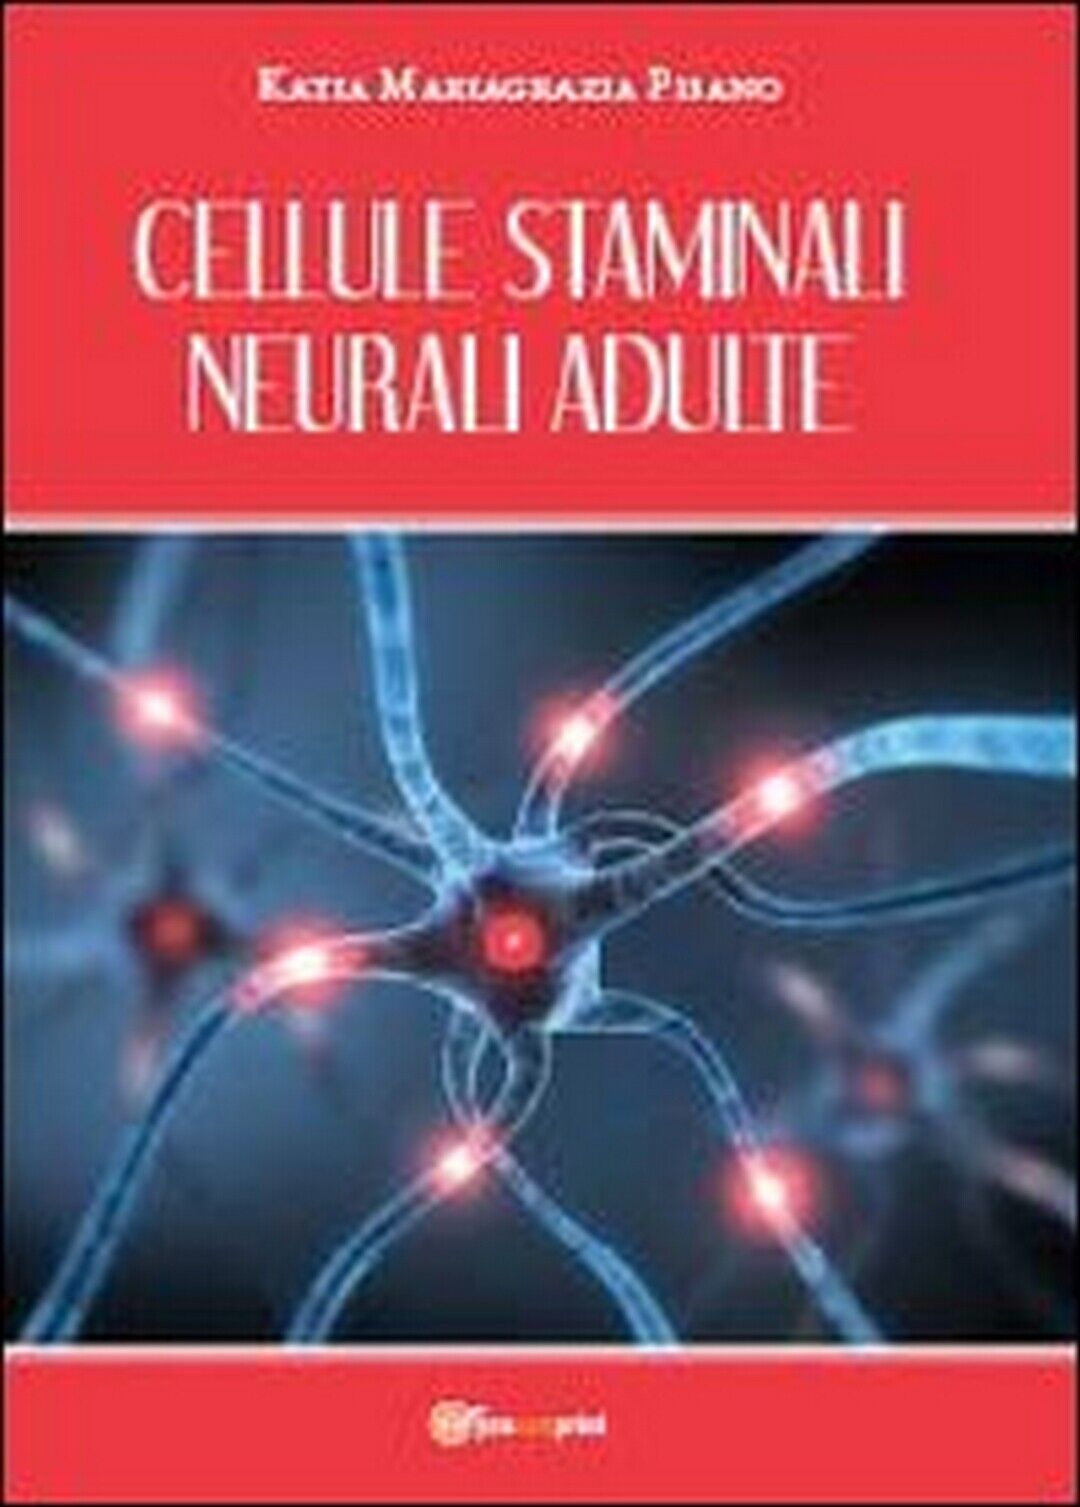 Cellule staminali neurali adulte  di Katia Mariagrazia Pisano,  2013,  Youcanpri